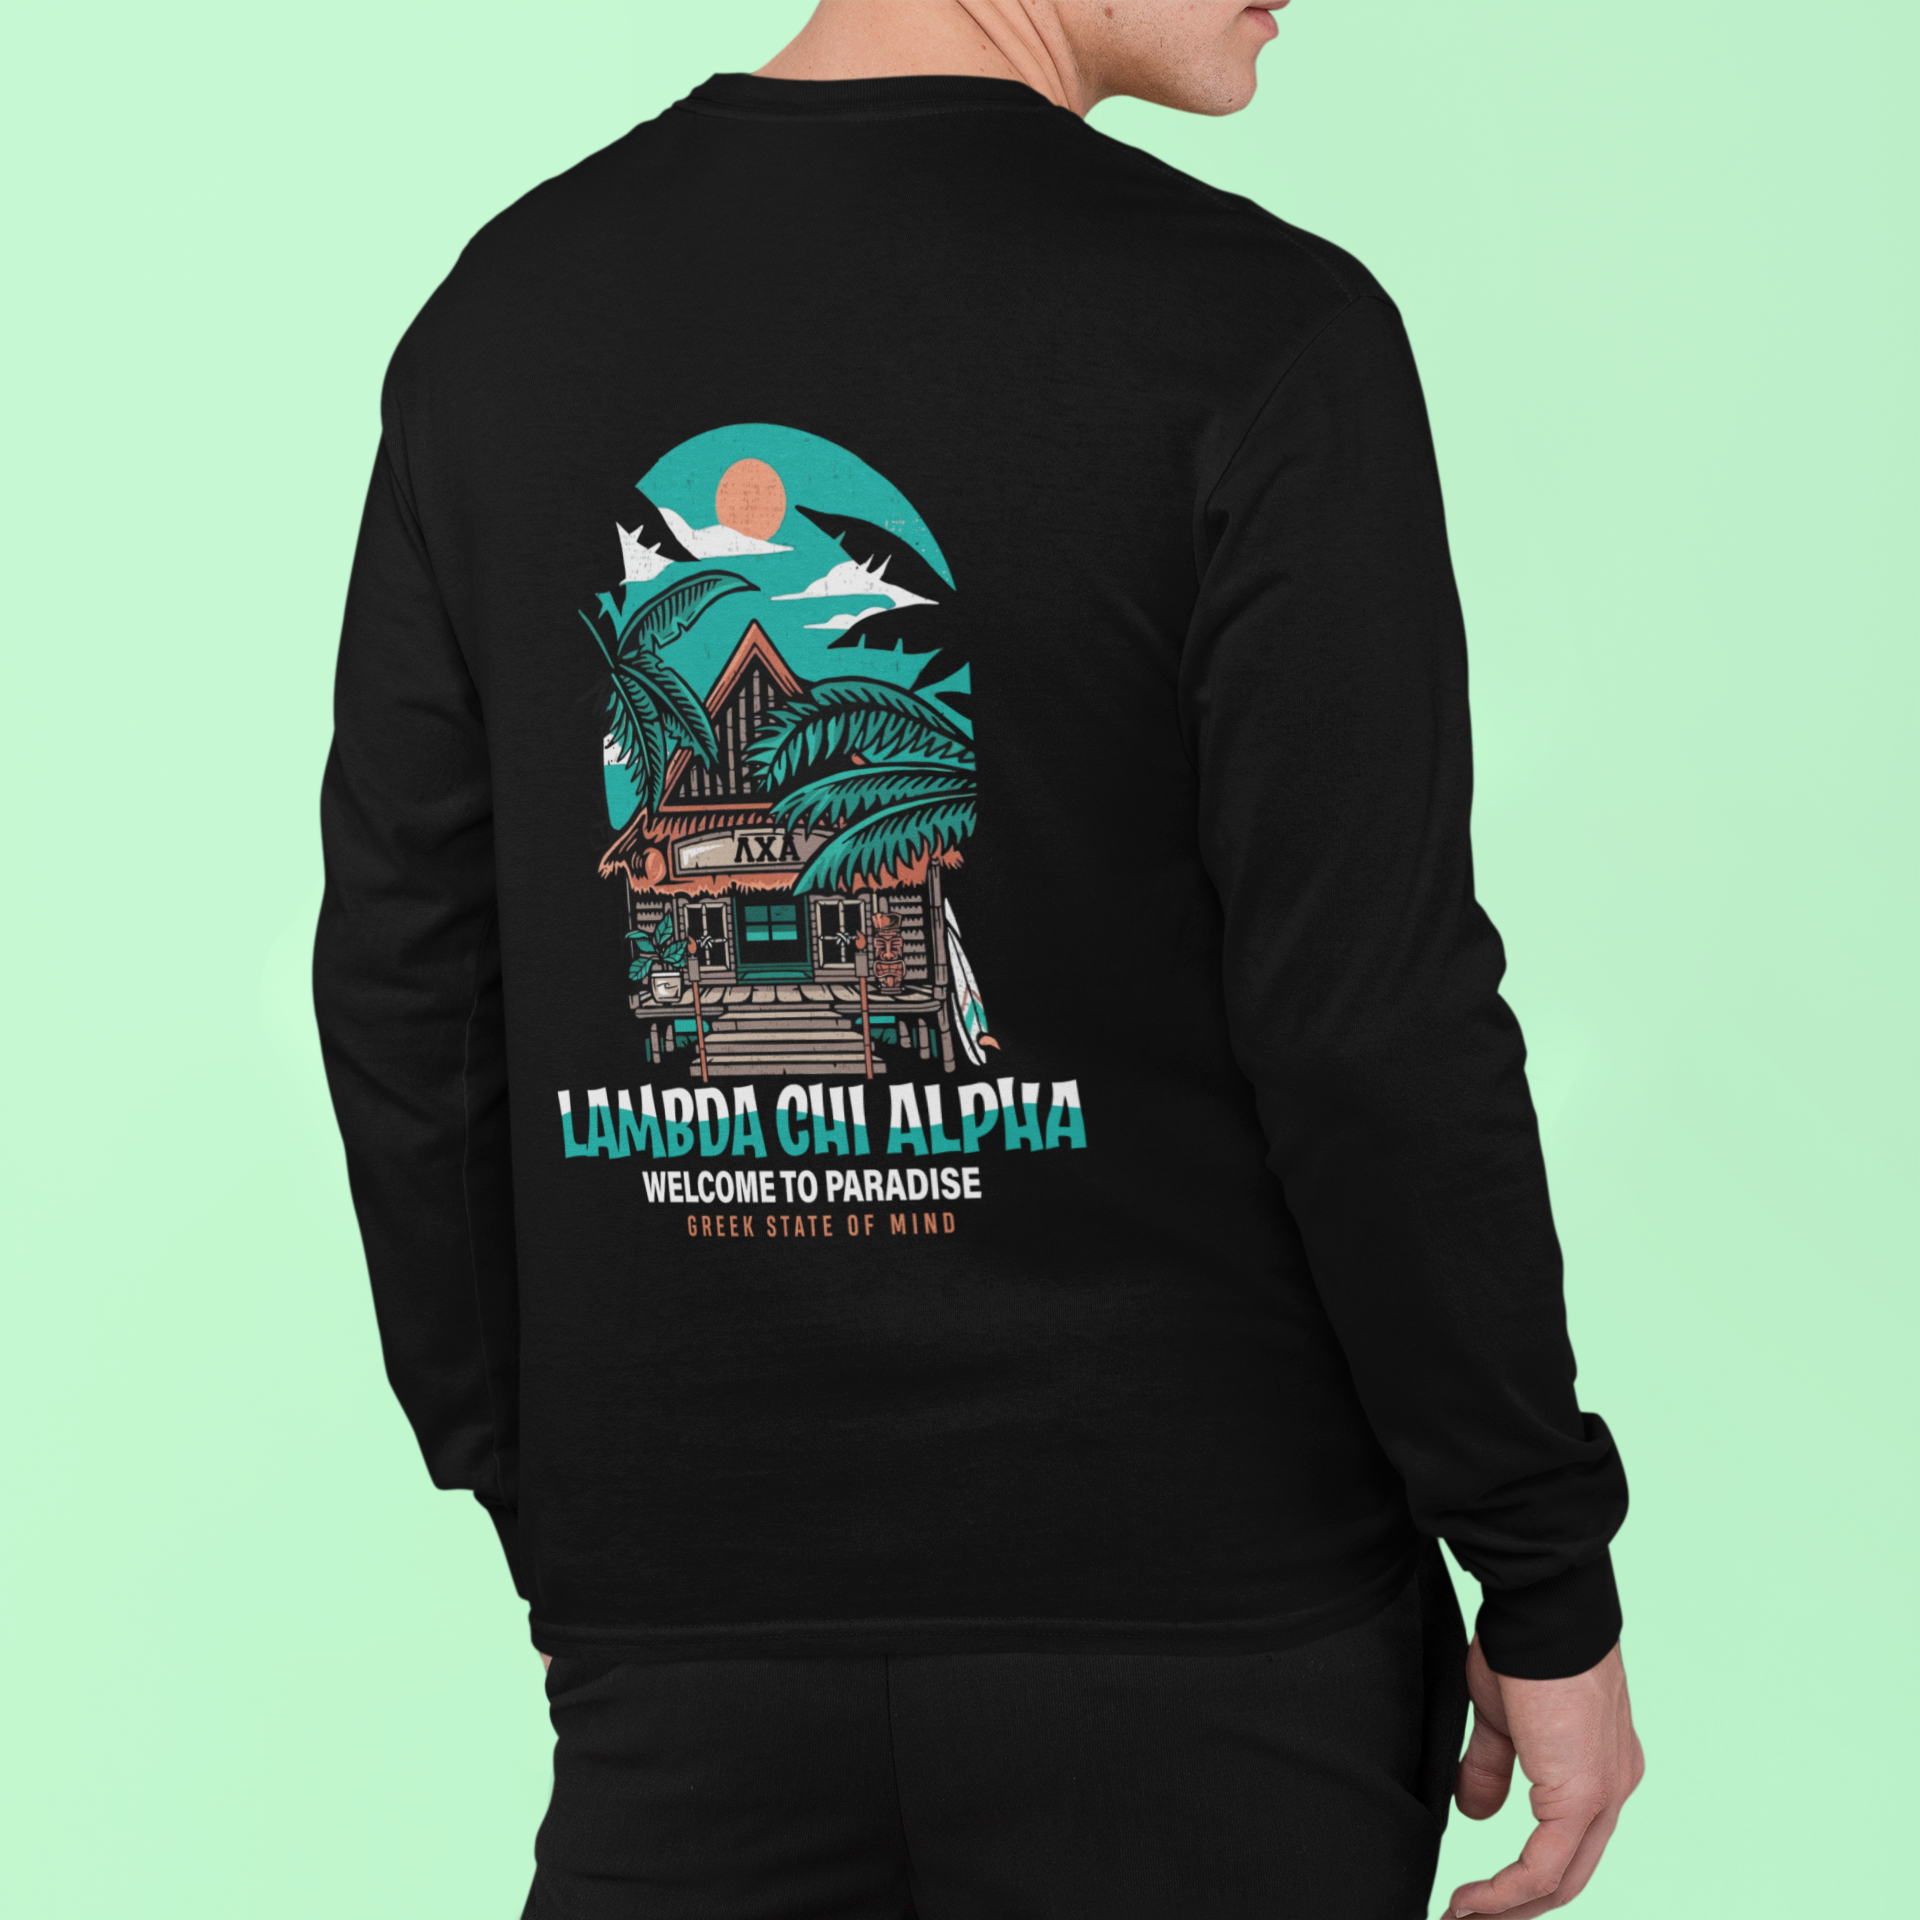 Black Lambda Chi Alpha Graphic Long Sleeve T-Shirt | Welcome to Paradise | Lambda Chi Alpha Fraternity Shirt model 